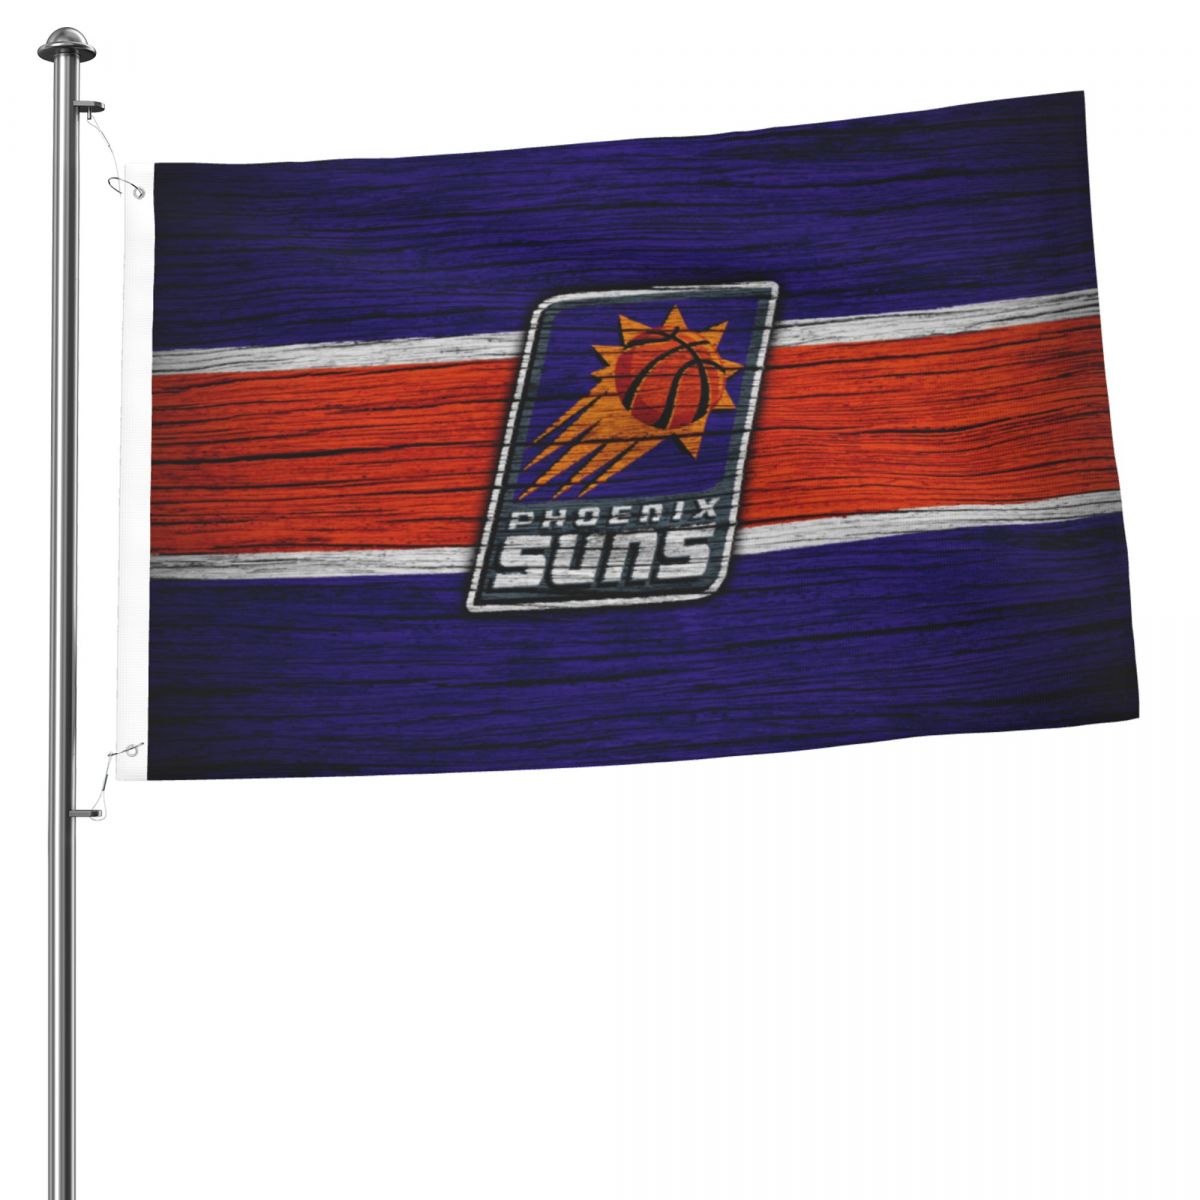 Phoenix Suns NBA Wooden Texture 2x3 FT UV Resistant Flag